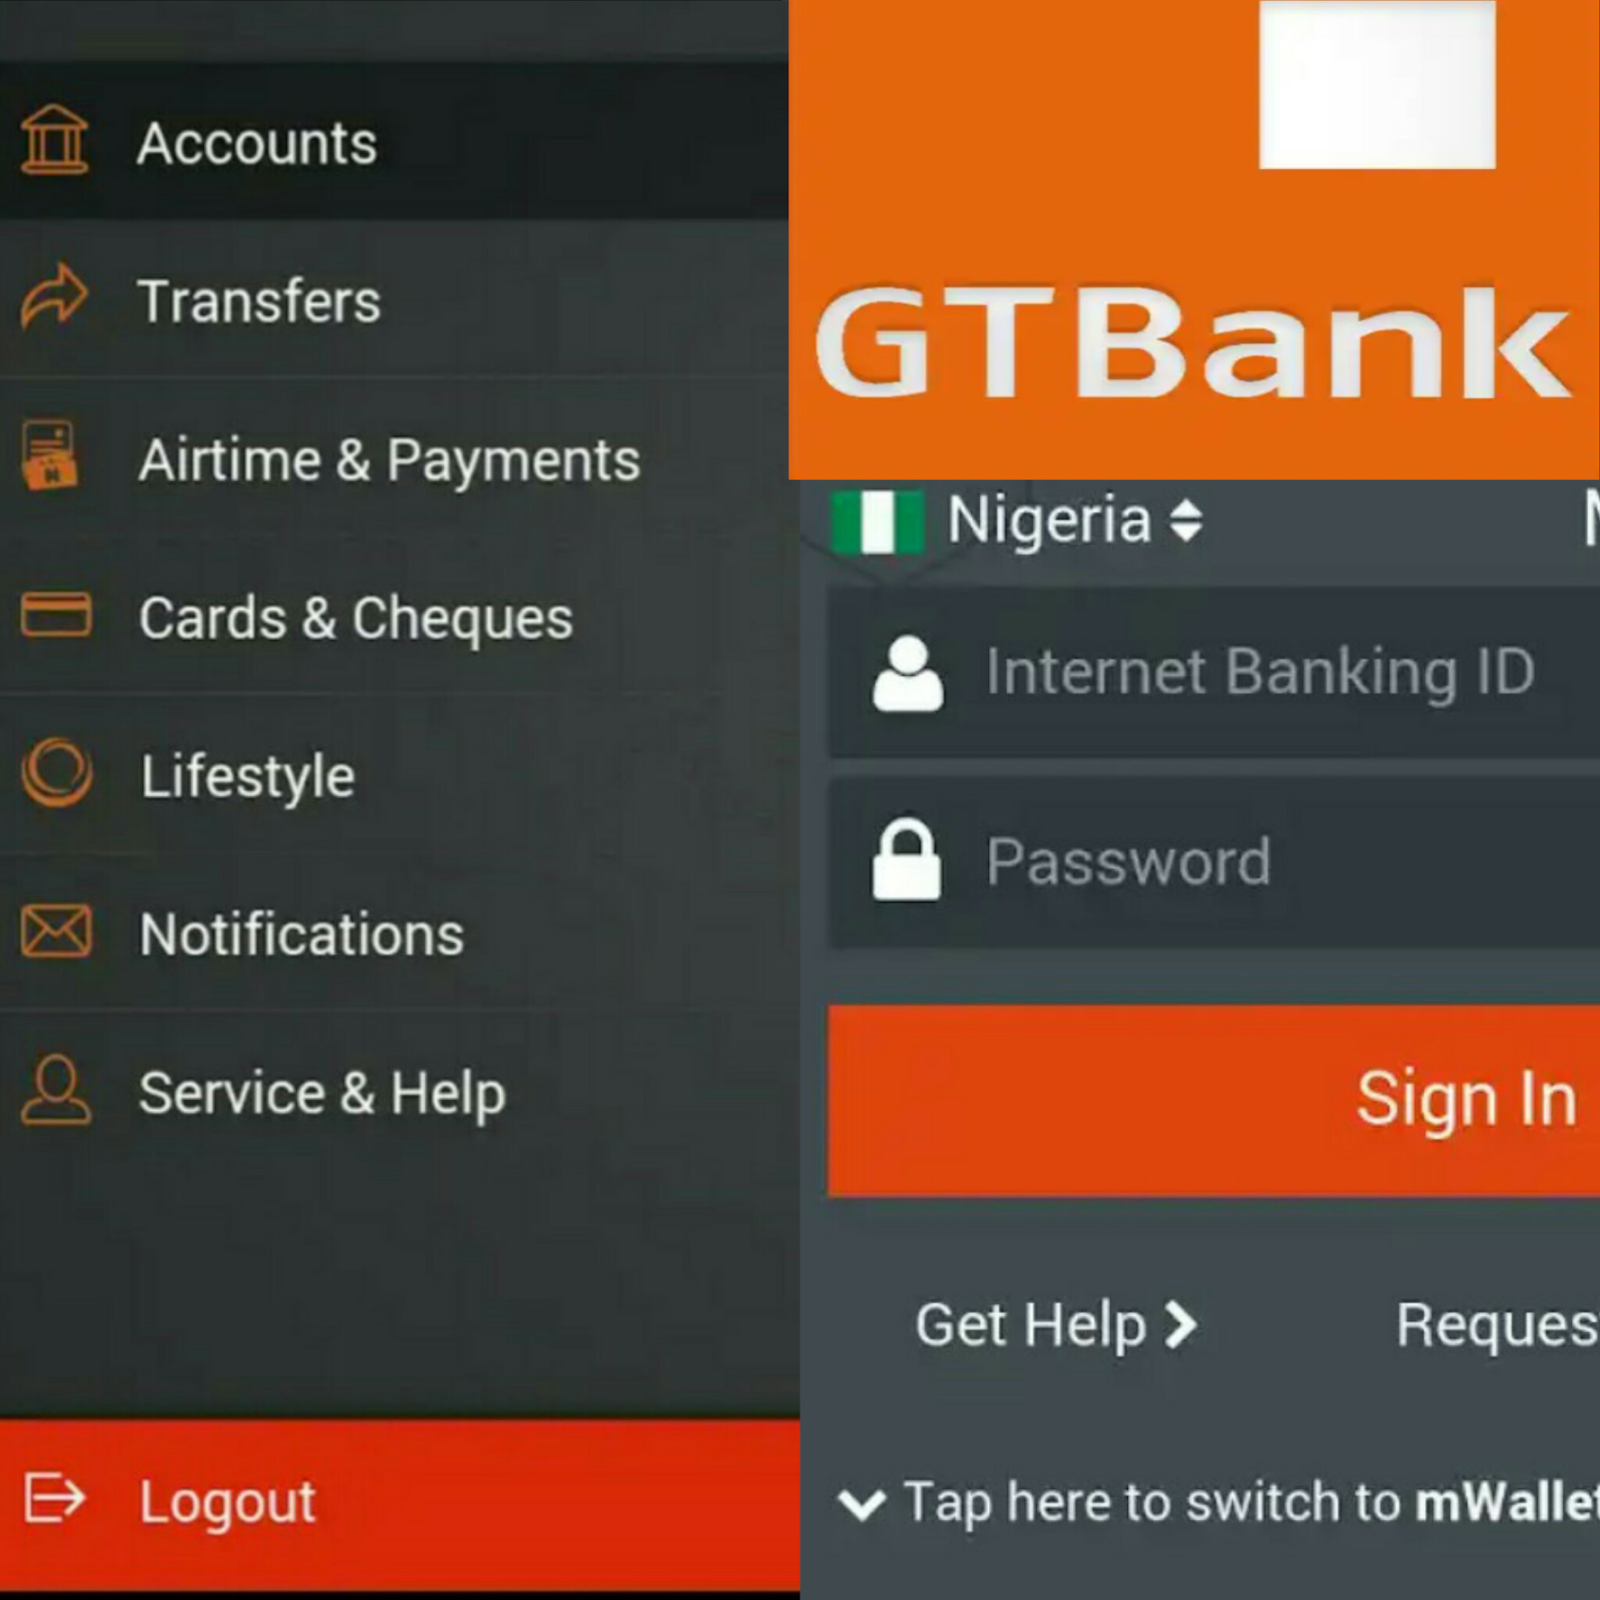 Download GTBank Mobile App For Faster, Safer, Easier ...